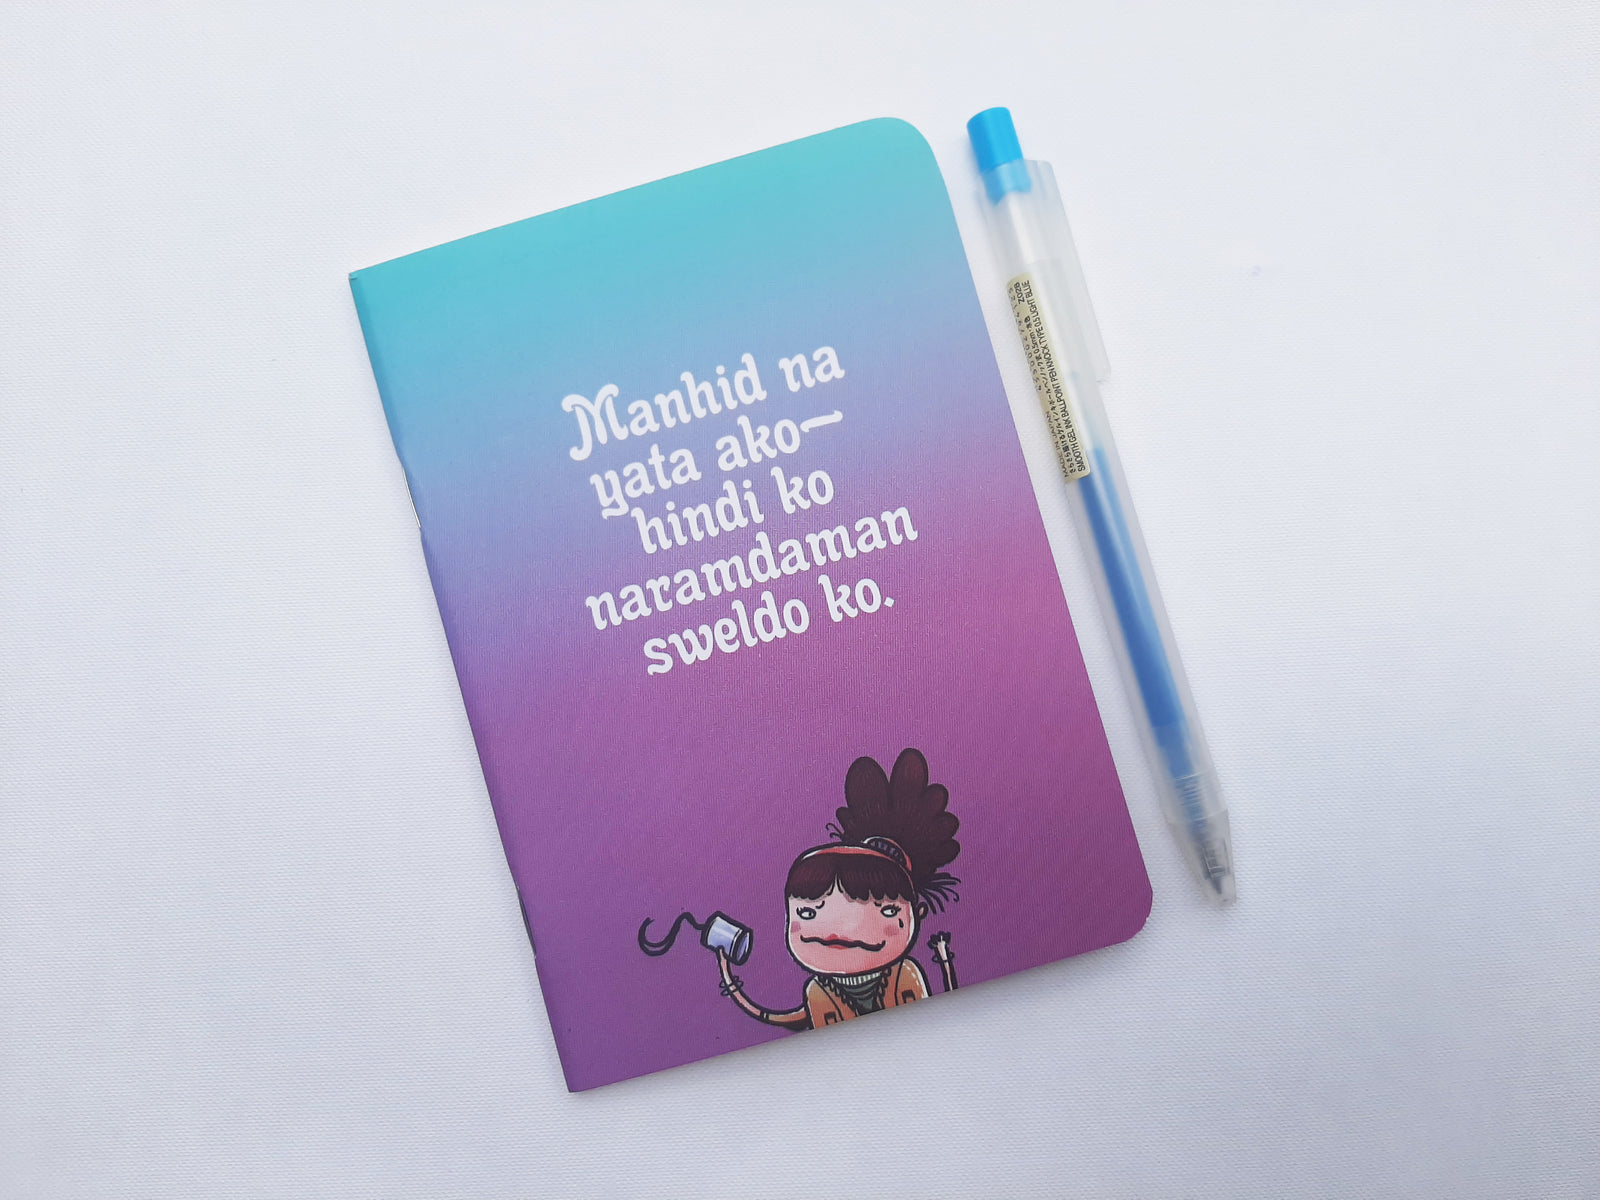 The Manhid Ako Pocket Notebook